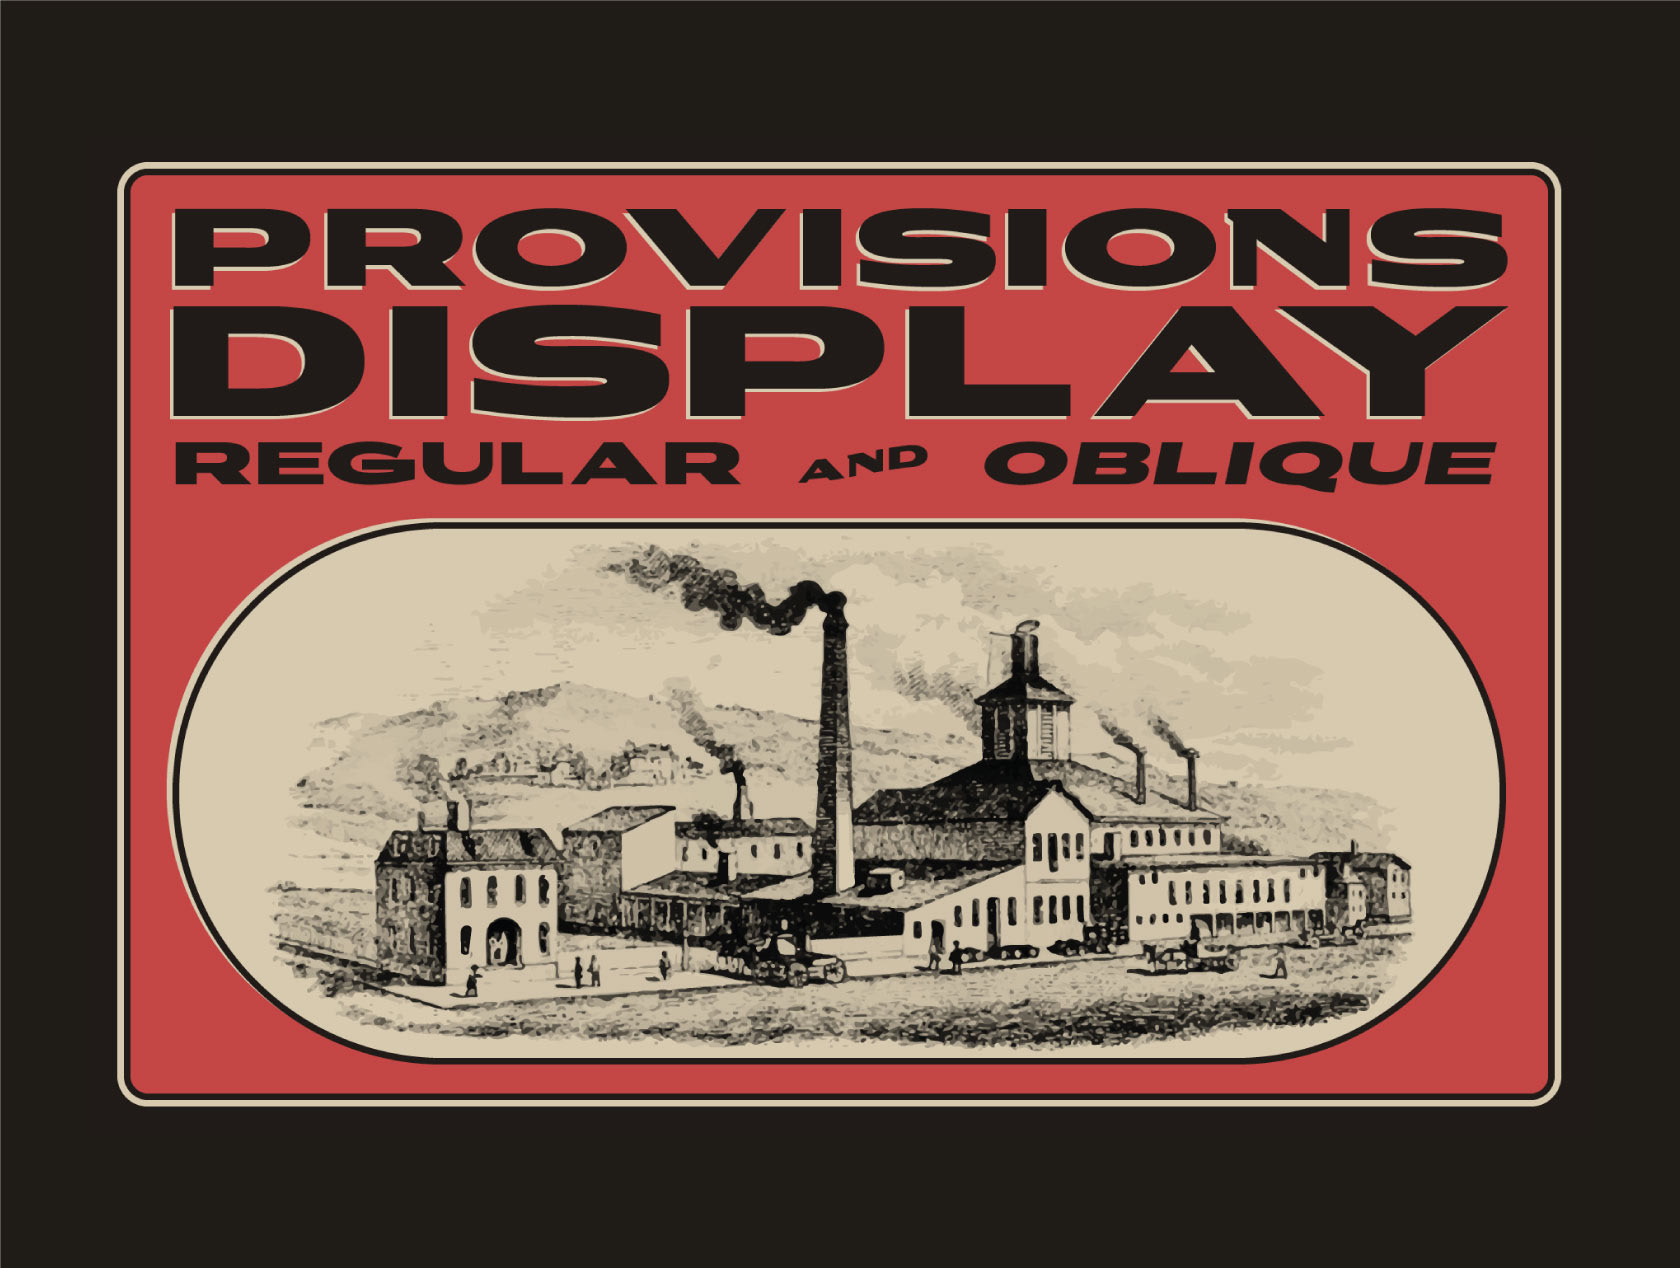 Provisions - Desktop Commercial Use License rendition image